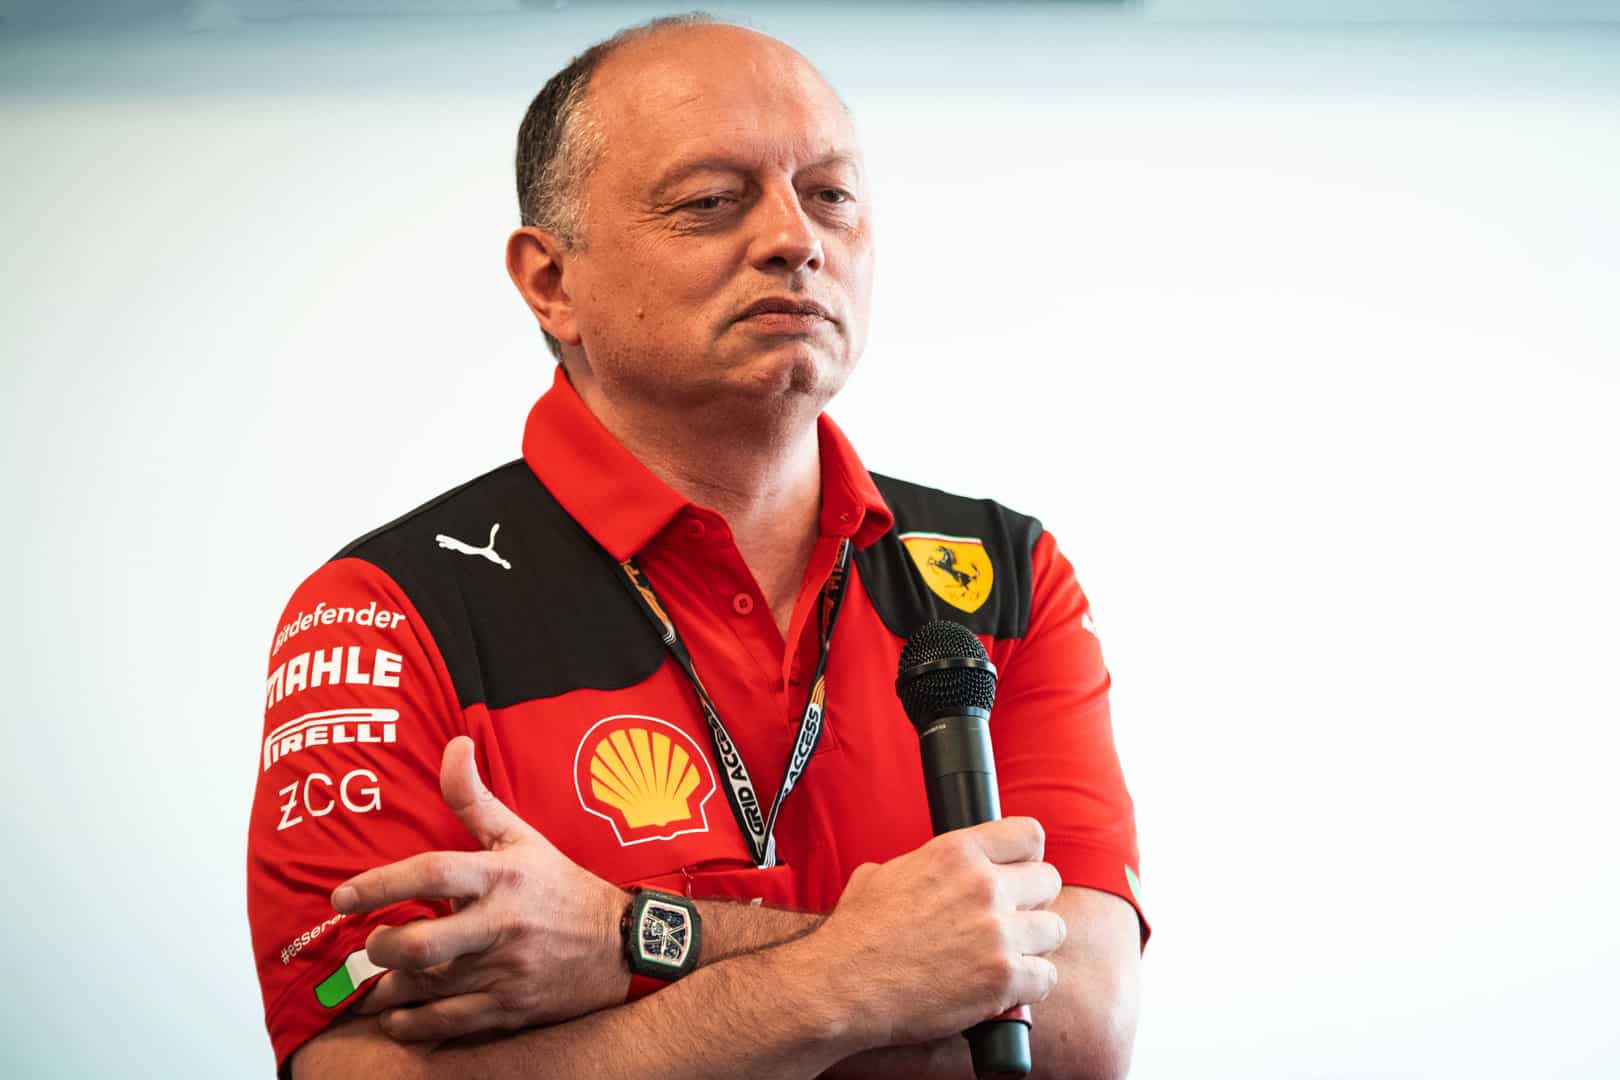 Fred Vasseur in Baku 2023 GP - Copyrights Ferrari official